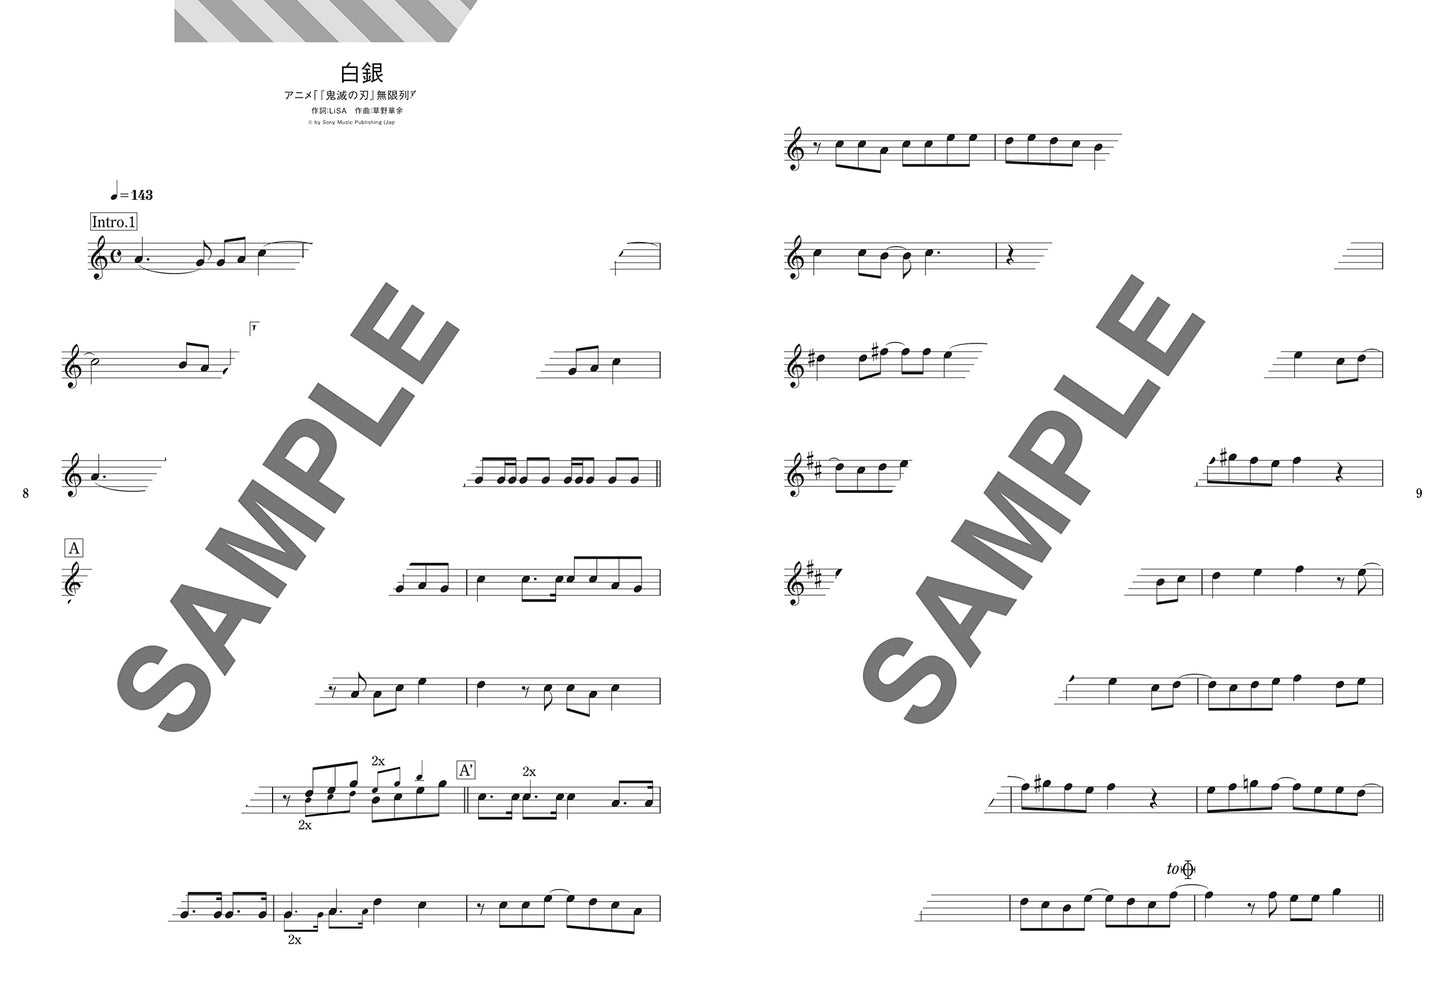 Popular Collection Tenor Saxophone for Teenagers(Upper-Intermediate) Sheet Music Book